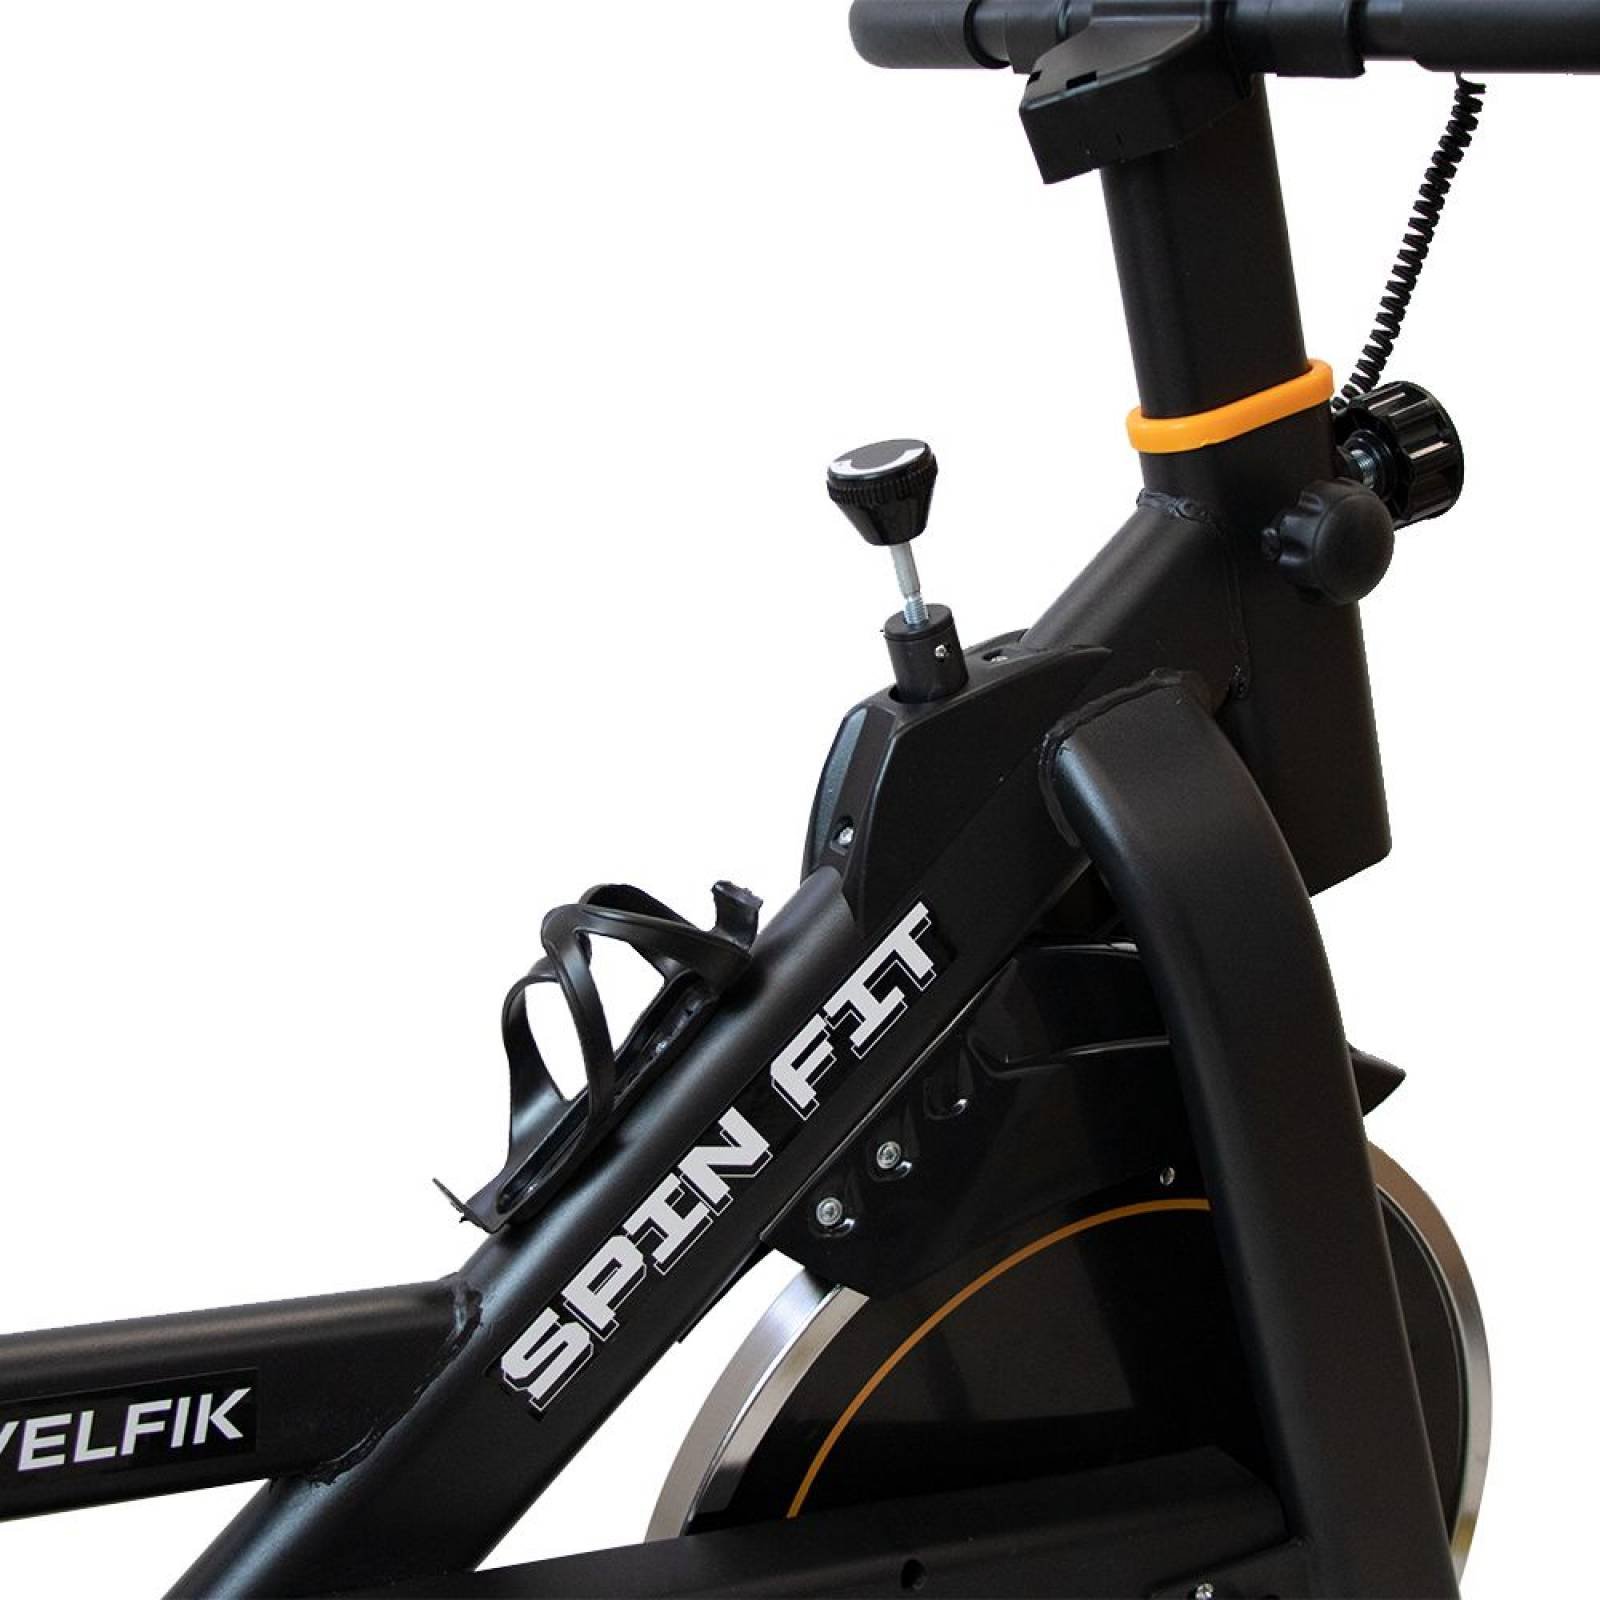 Bicicleta fija para spinning Svelfik - Spin Fit 6kg Na